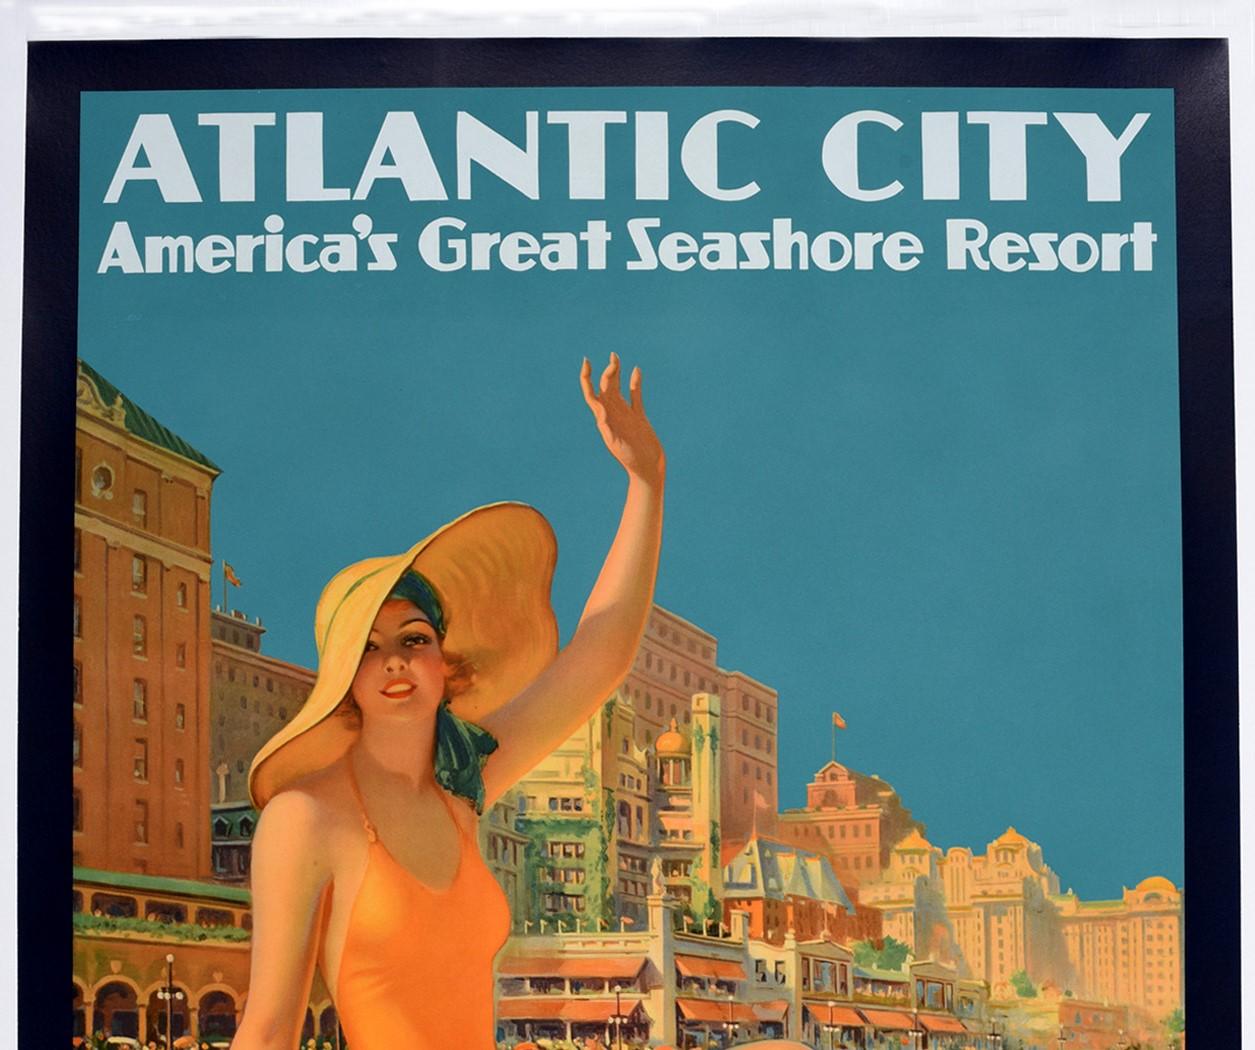 Original Vintage Art Deco Poster Pennsylvania Railroad Atlantic City Resort - Print by Edward Eggleston